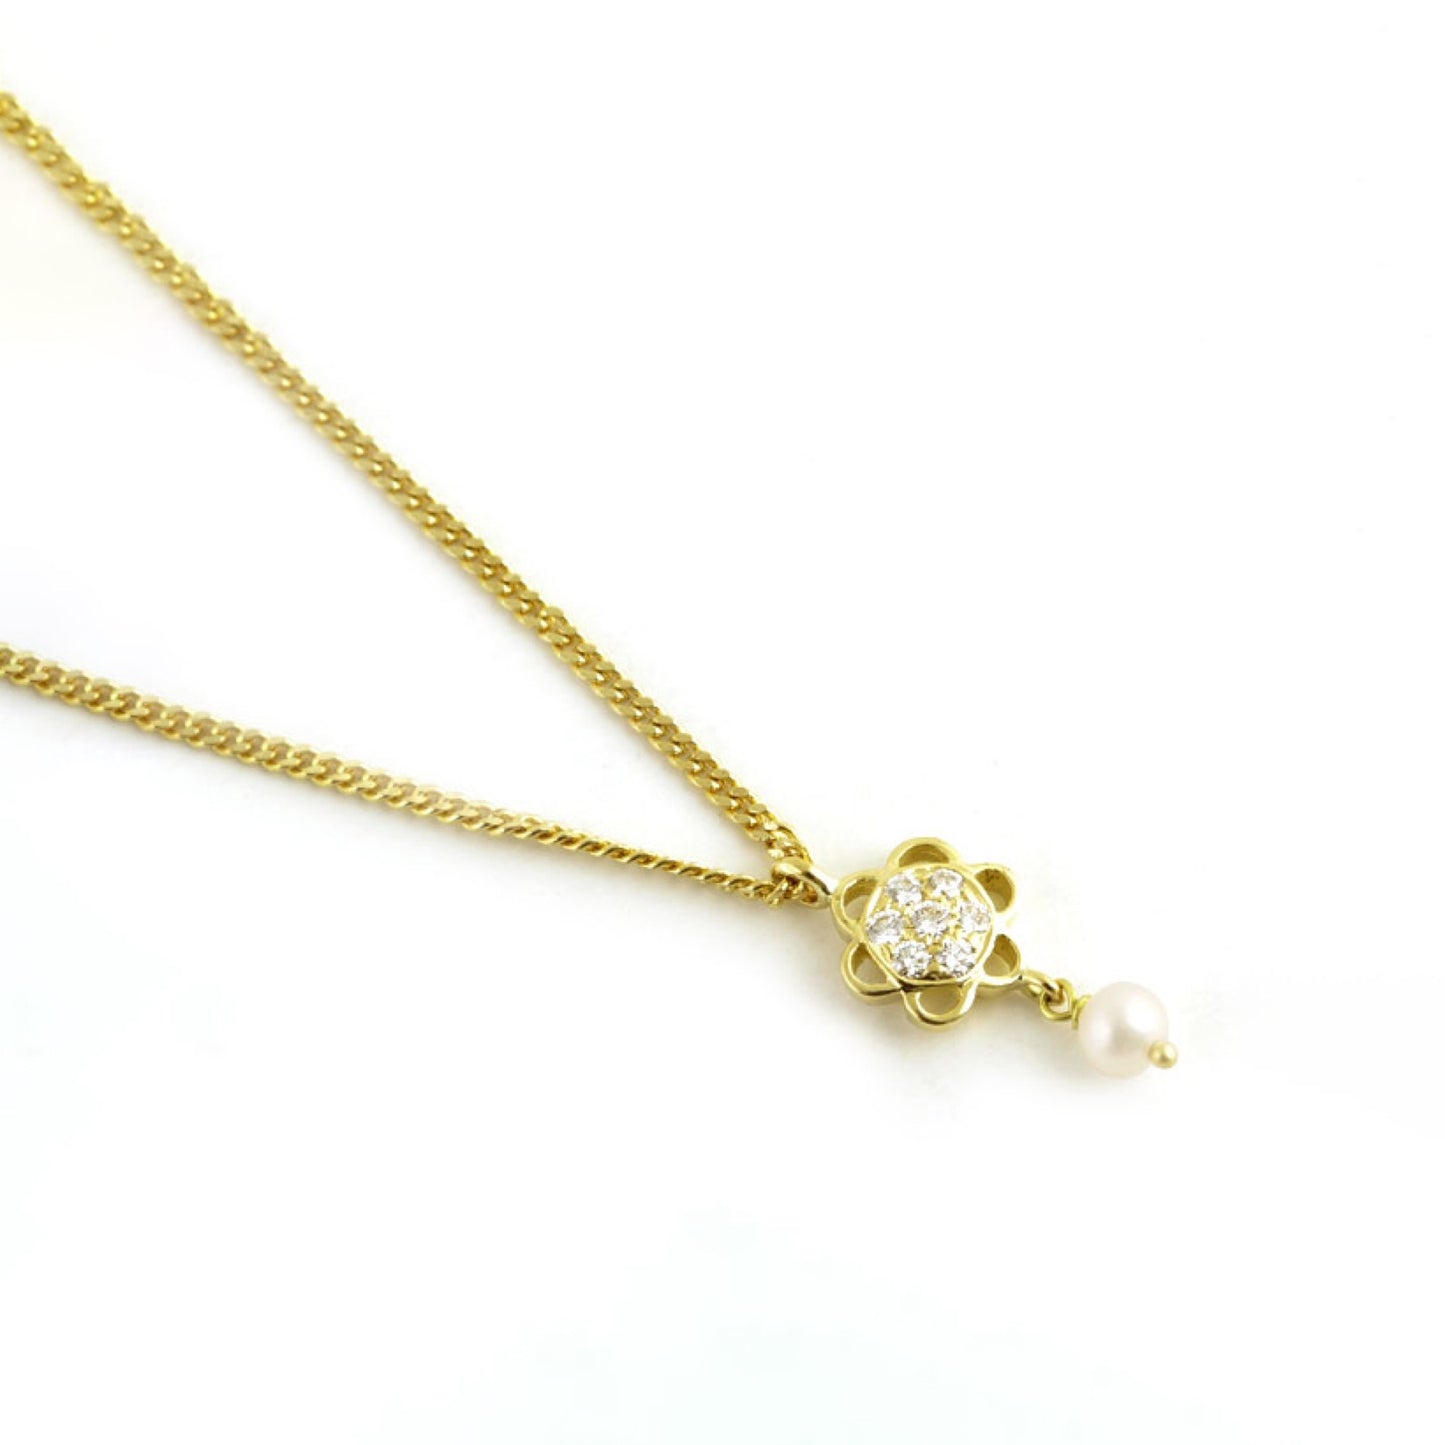 The Babyrasa Varuna Floral Gold, Diamond and Pearl Pendant by Rasvihar